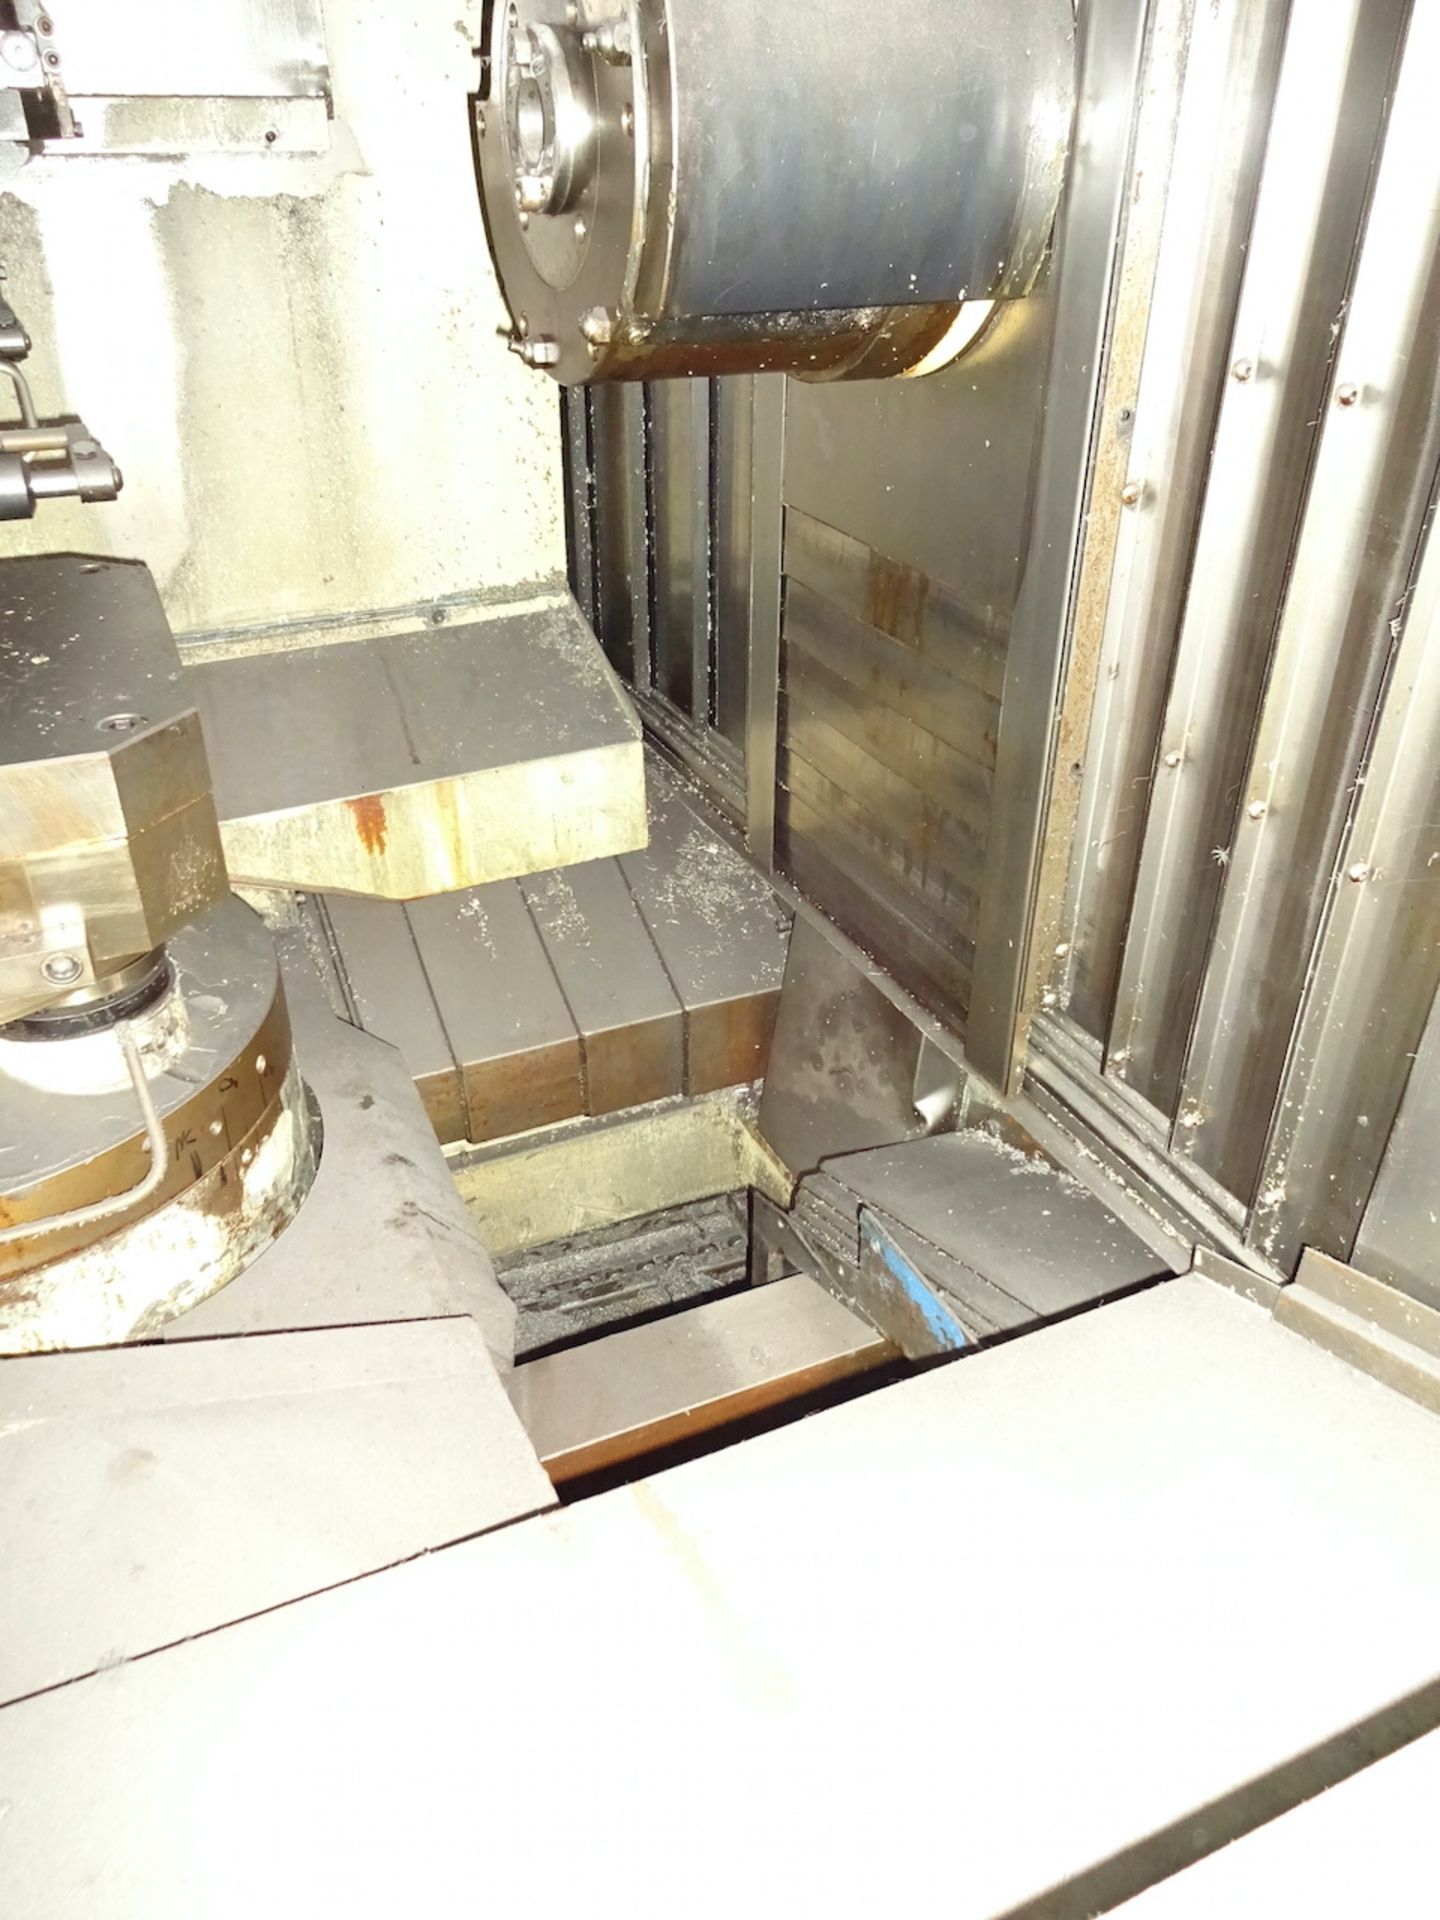 KITAMURA MODEL MYCENTER HX400 CNC HORIZONTAL MACHINING CENTER, S/N 42477, 13,000 RPM MAX SPINDLE - Image 19 of 31